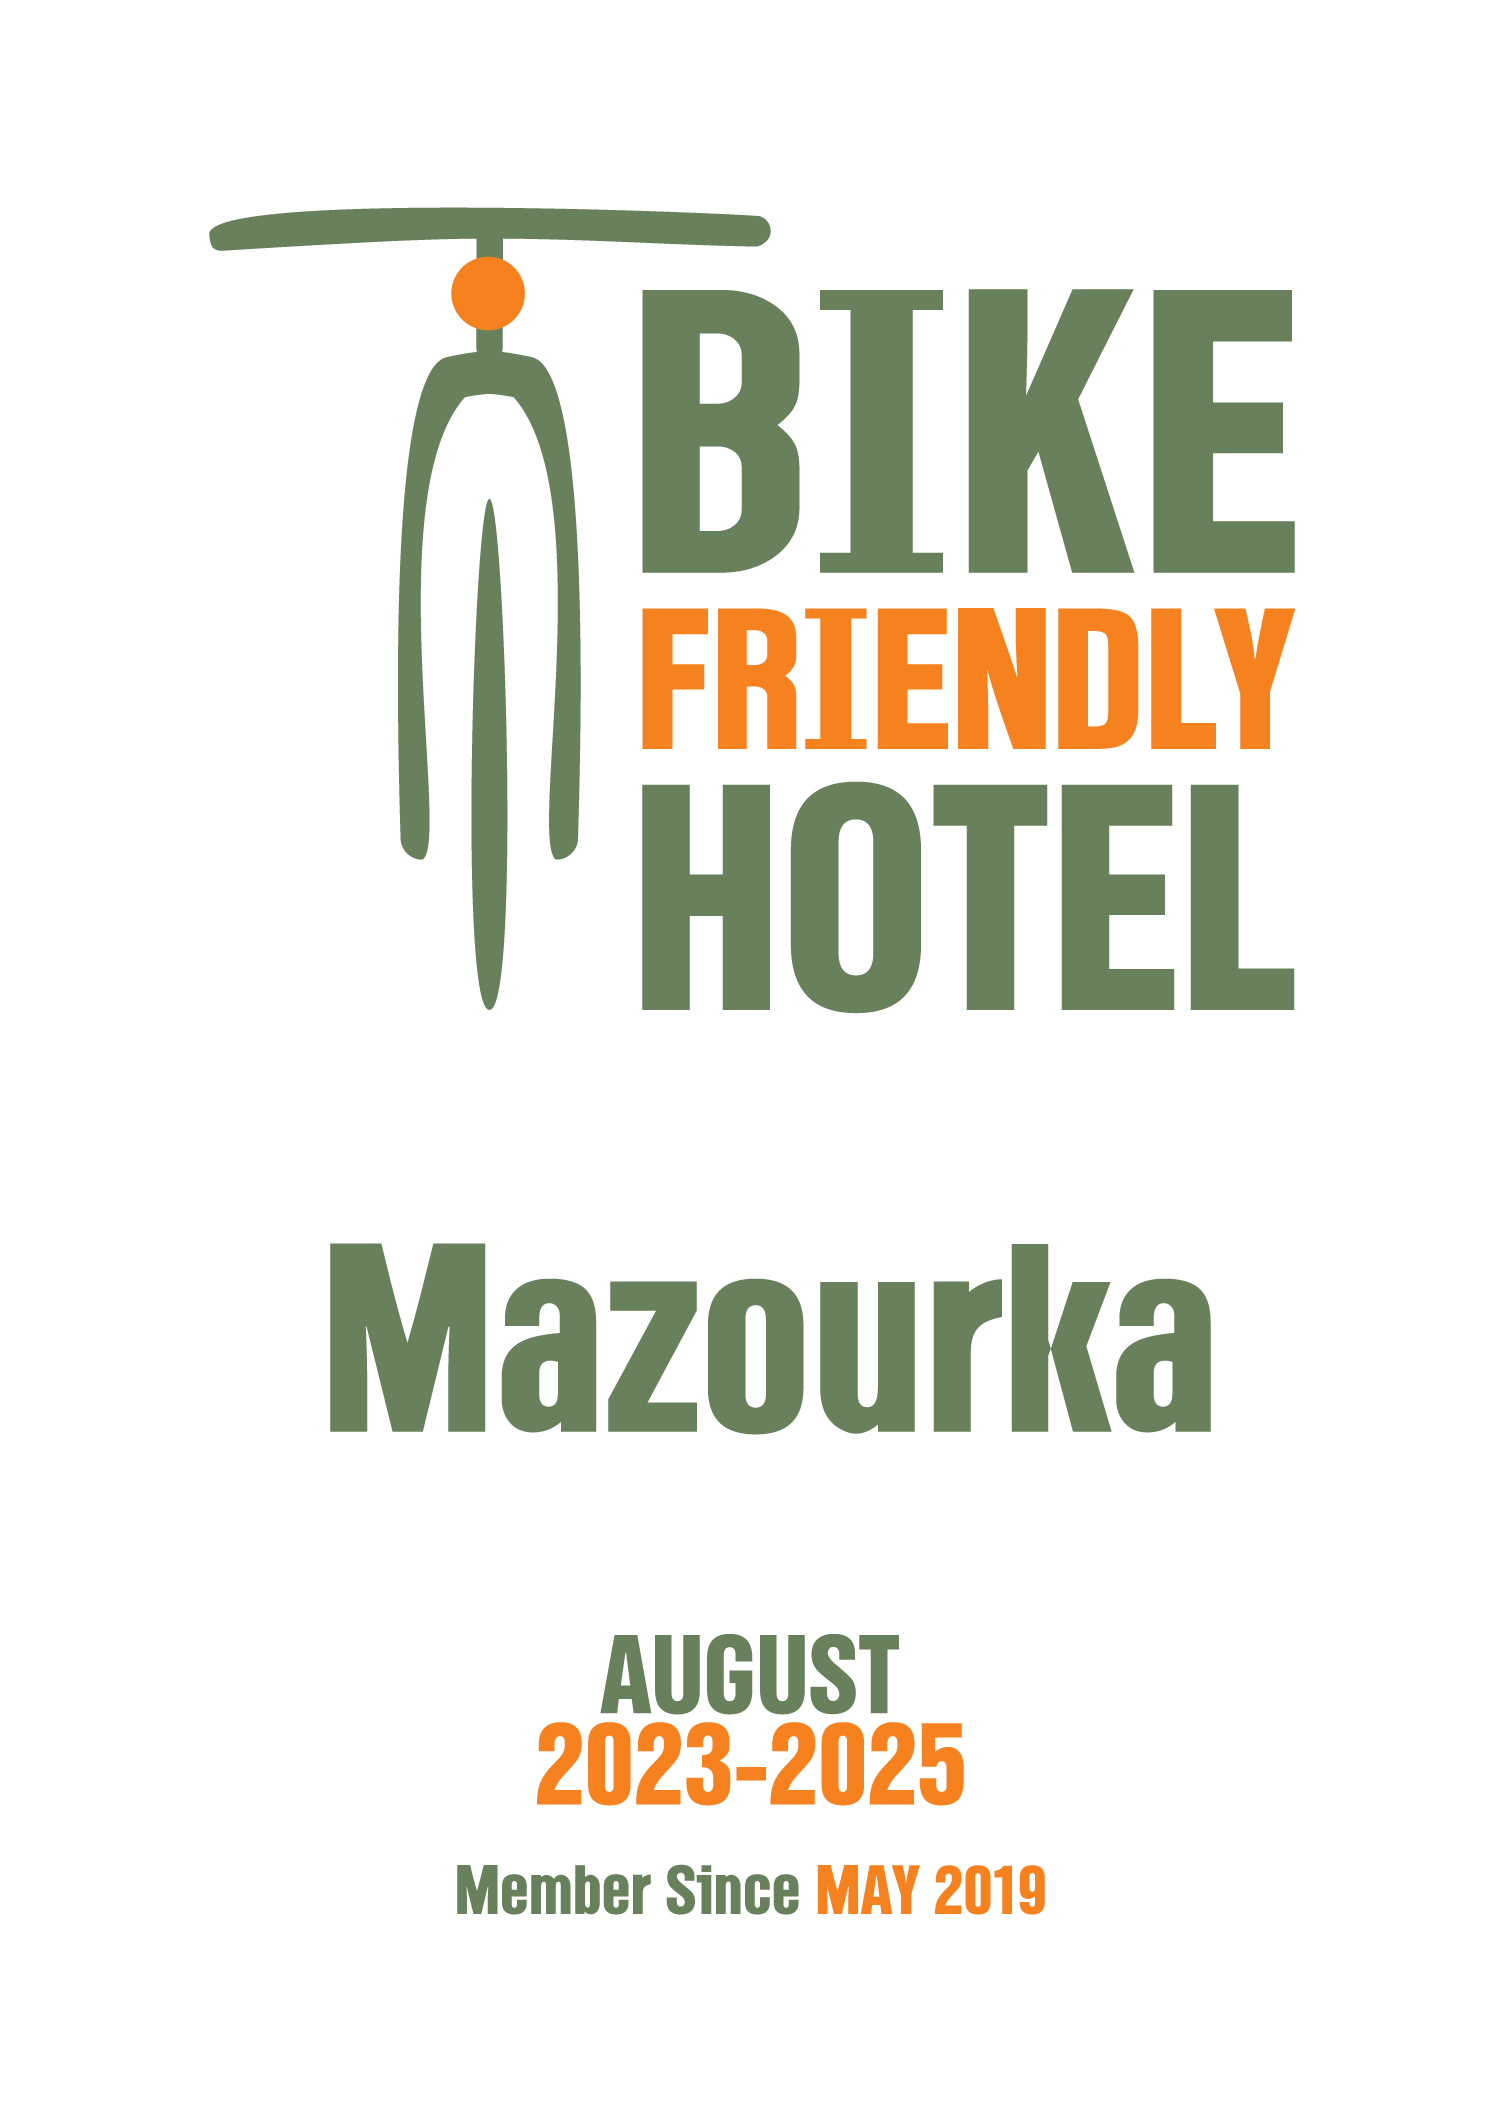 Villa Mazourka-Bike friendly hotel